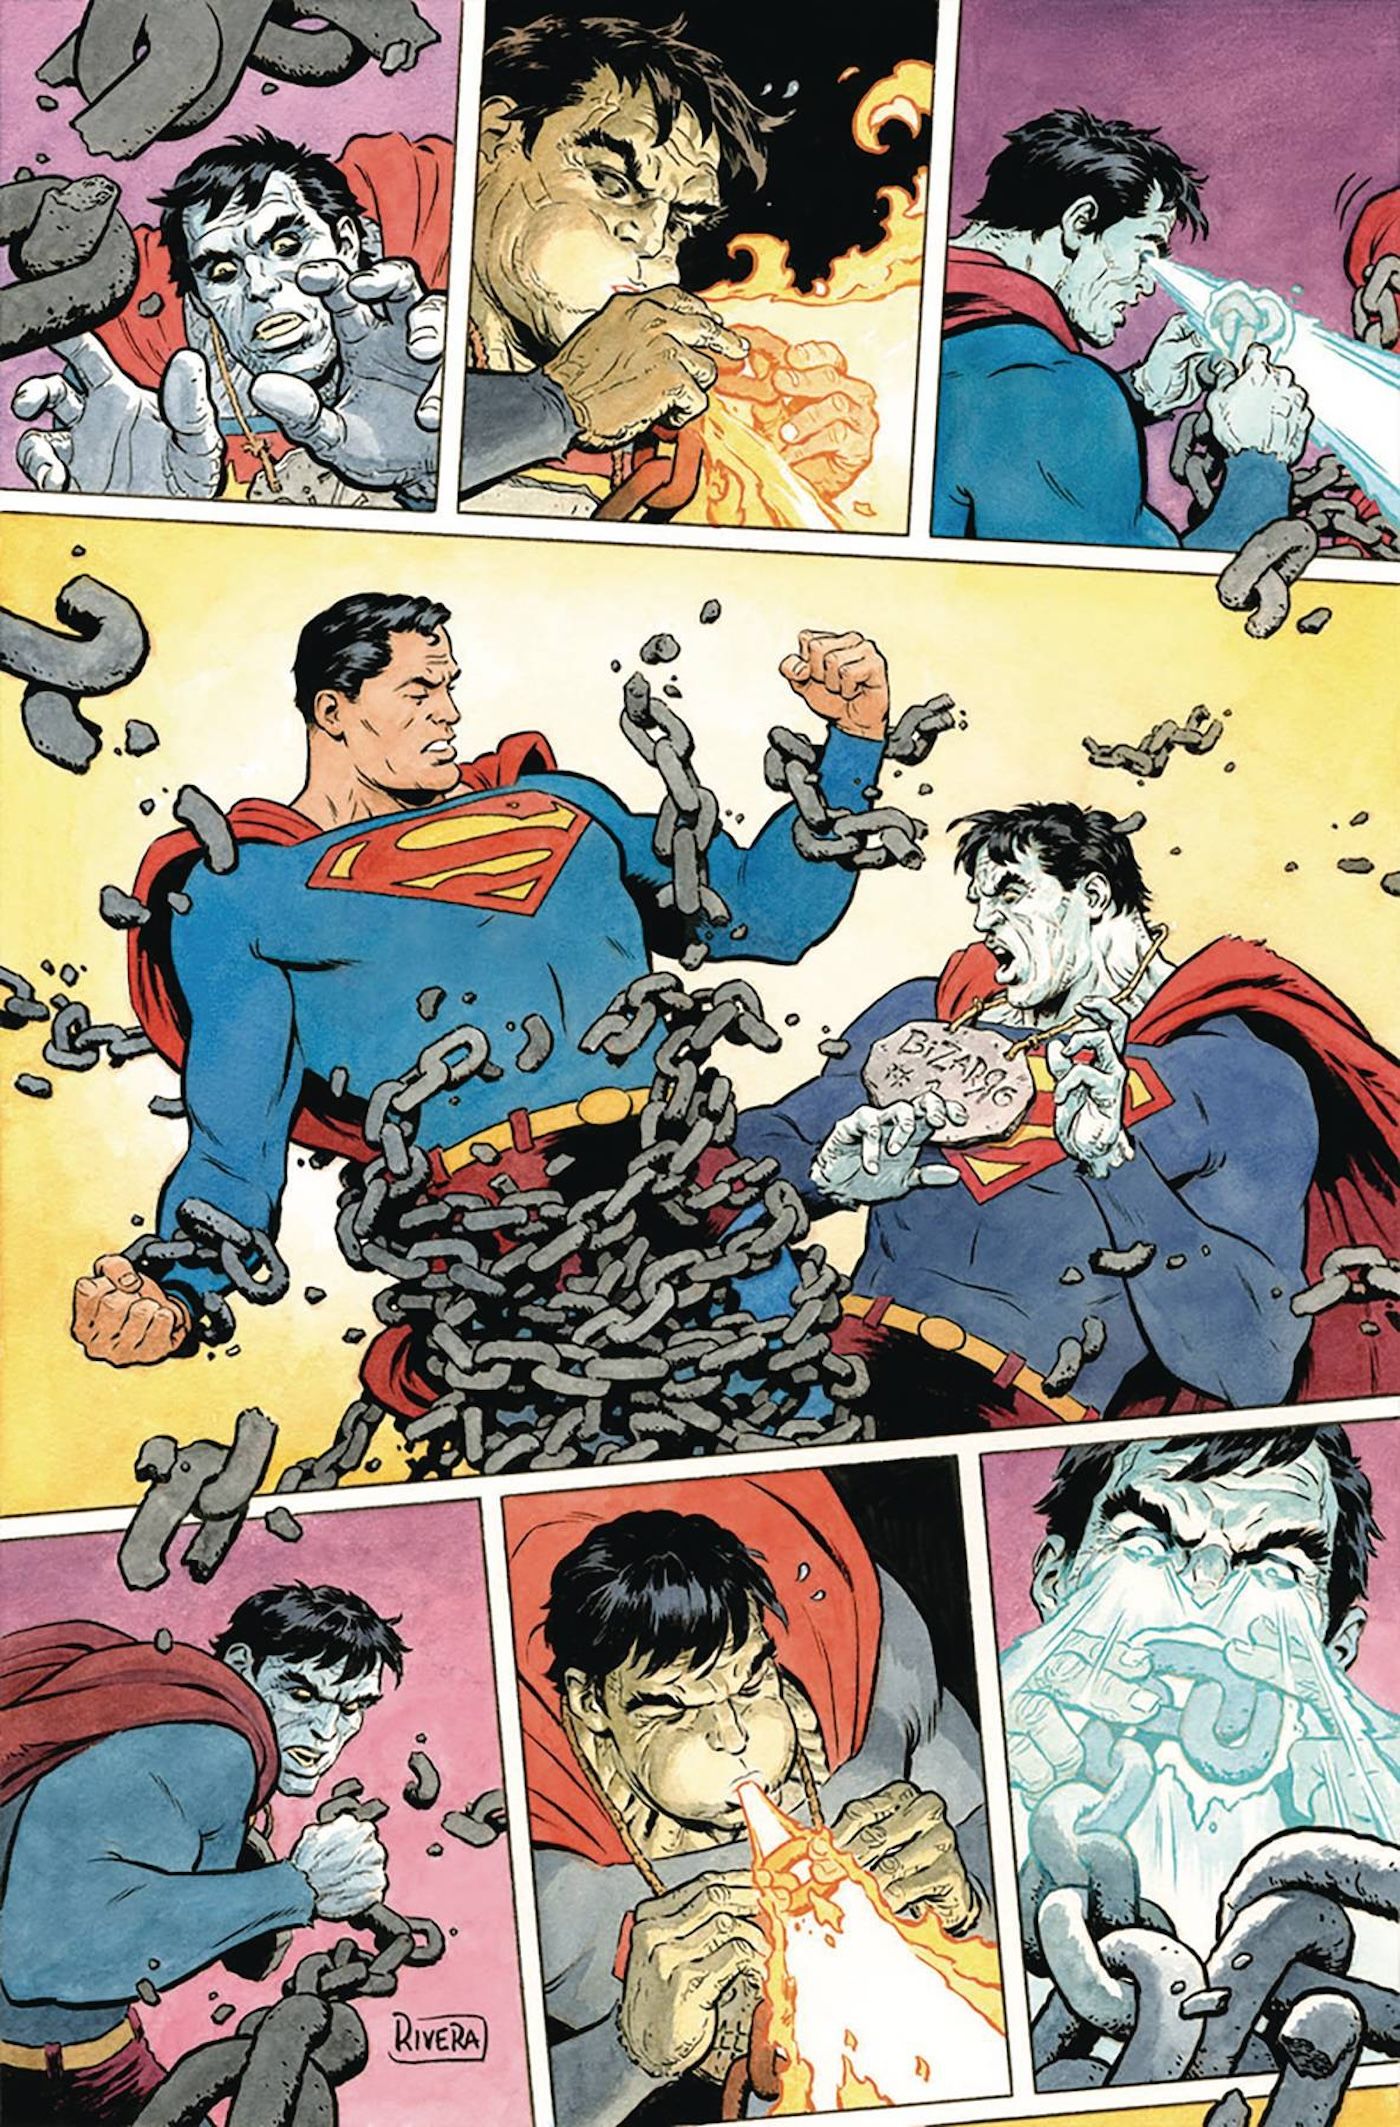 Action Comics 1063 Rivera Variant Cover: Superman fighting Bizarro across many panels.